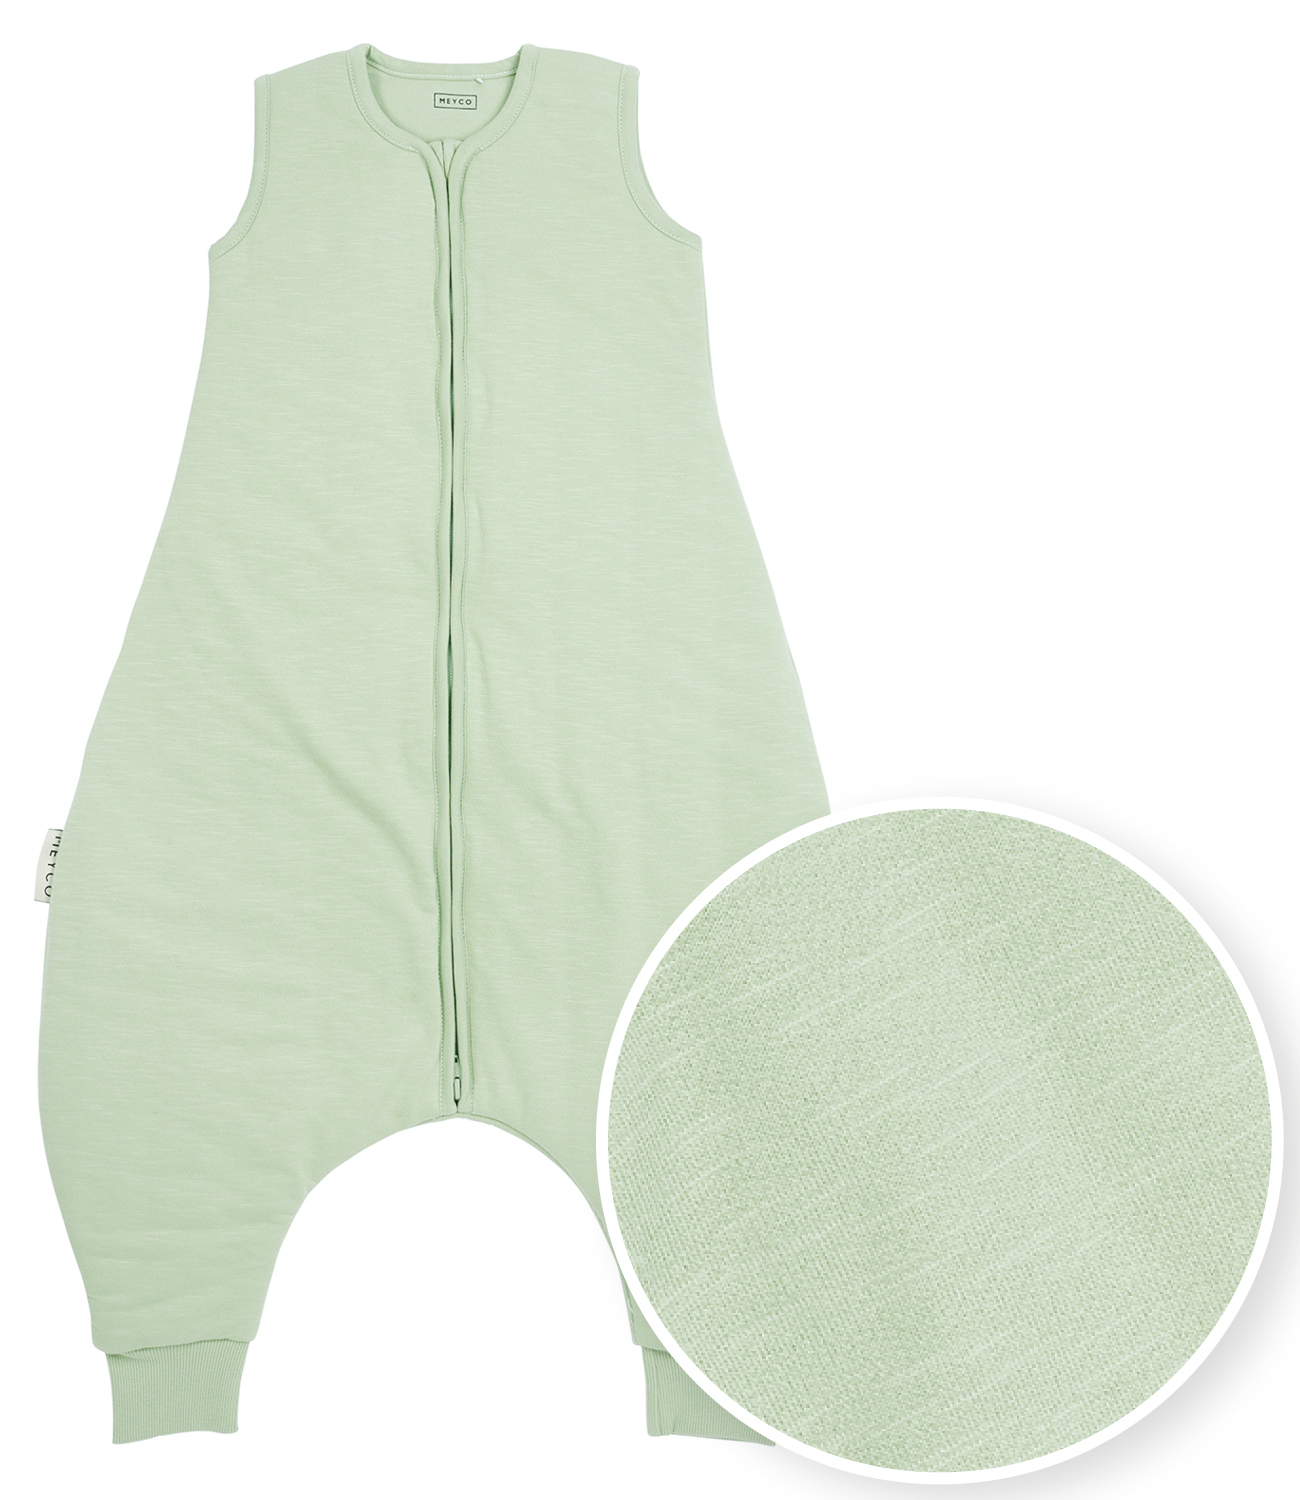 Baby winter Schlafoverall Jumper Slub - soft green - 92cm